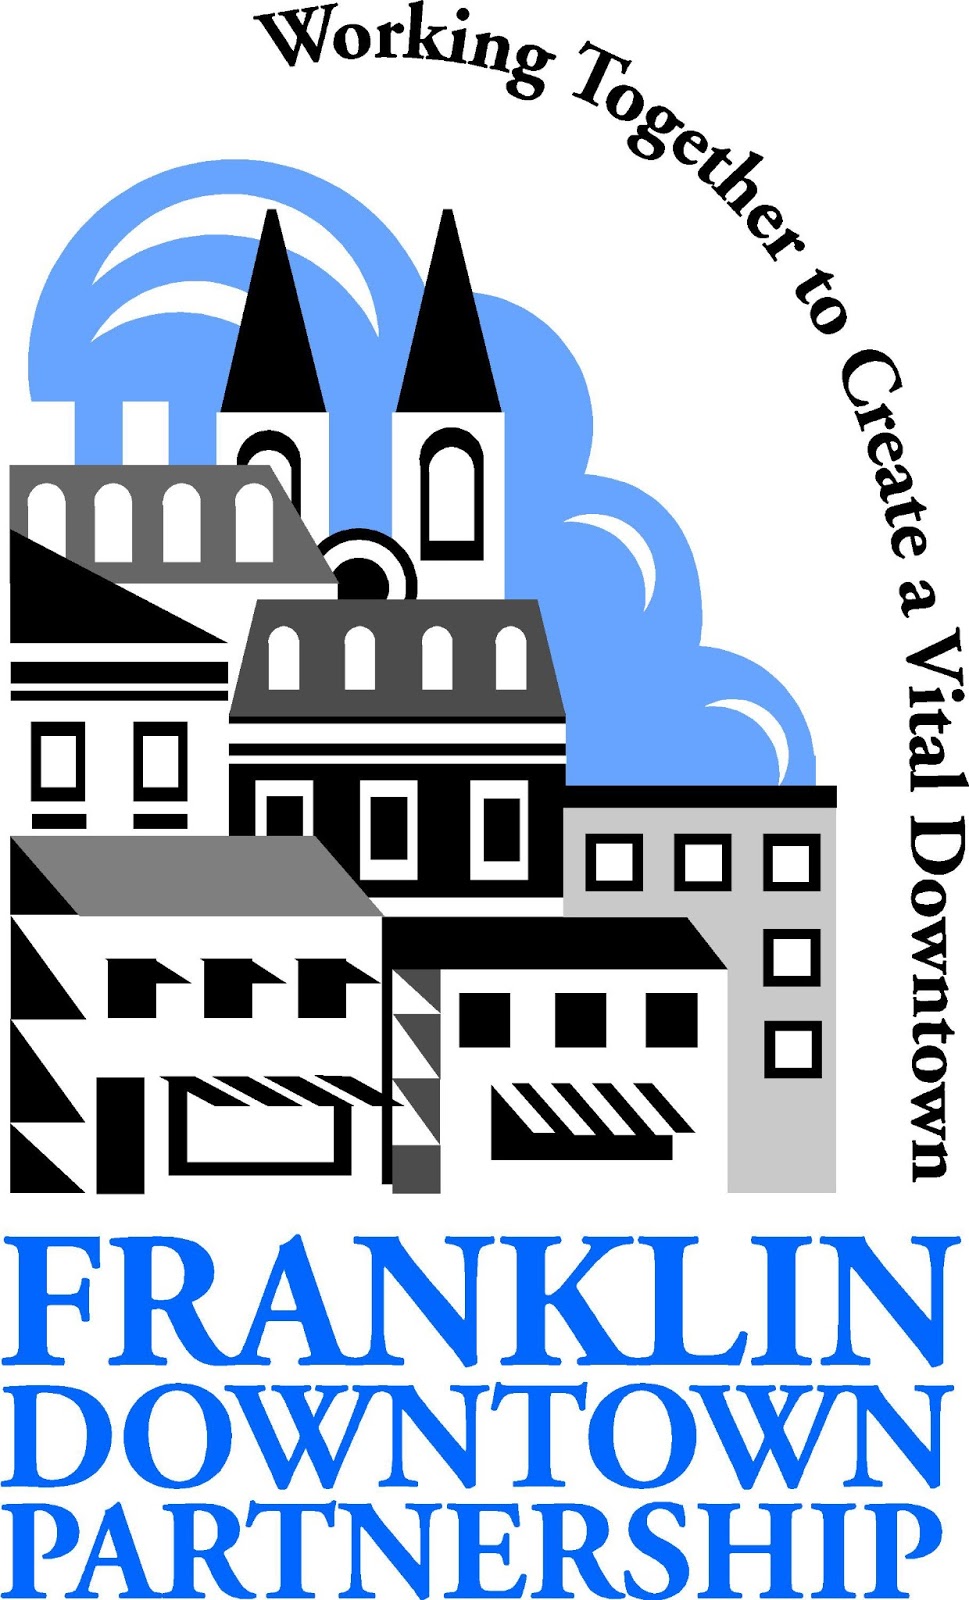 Franklin Downtown Partnership